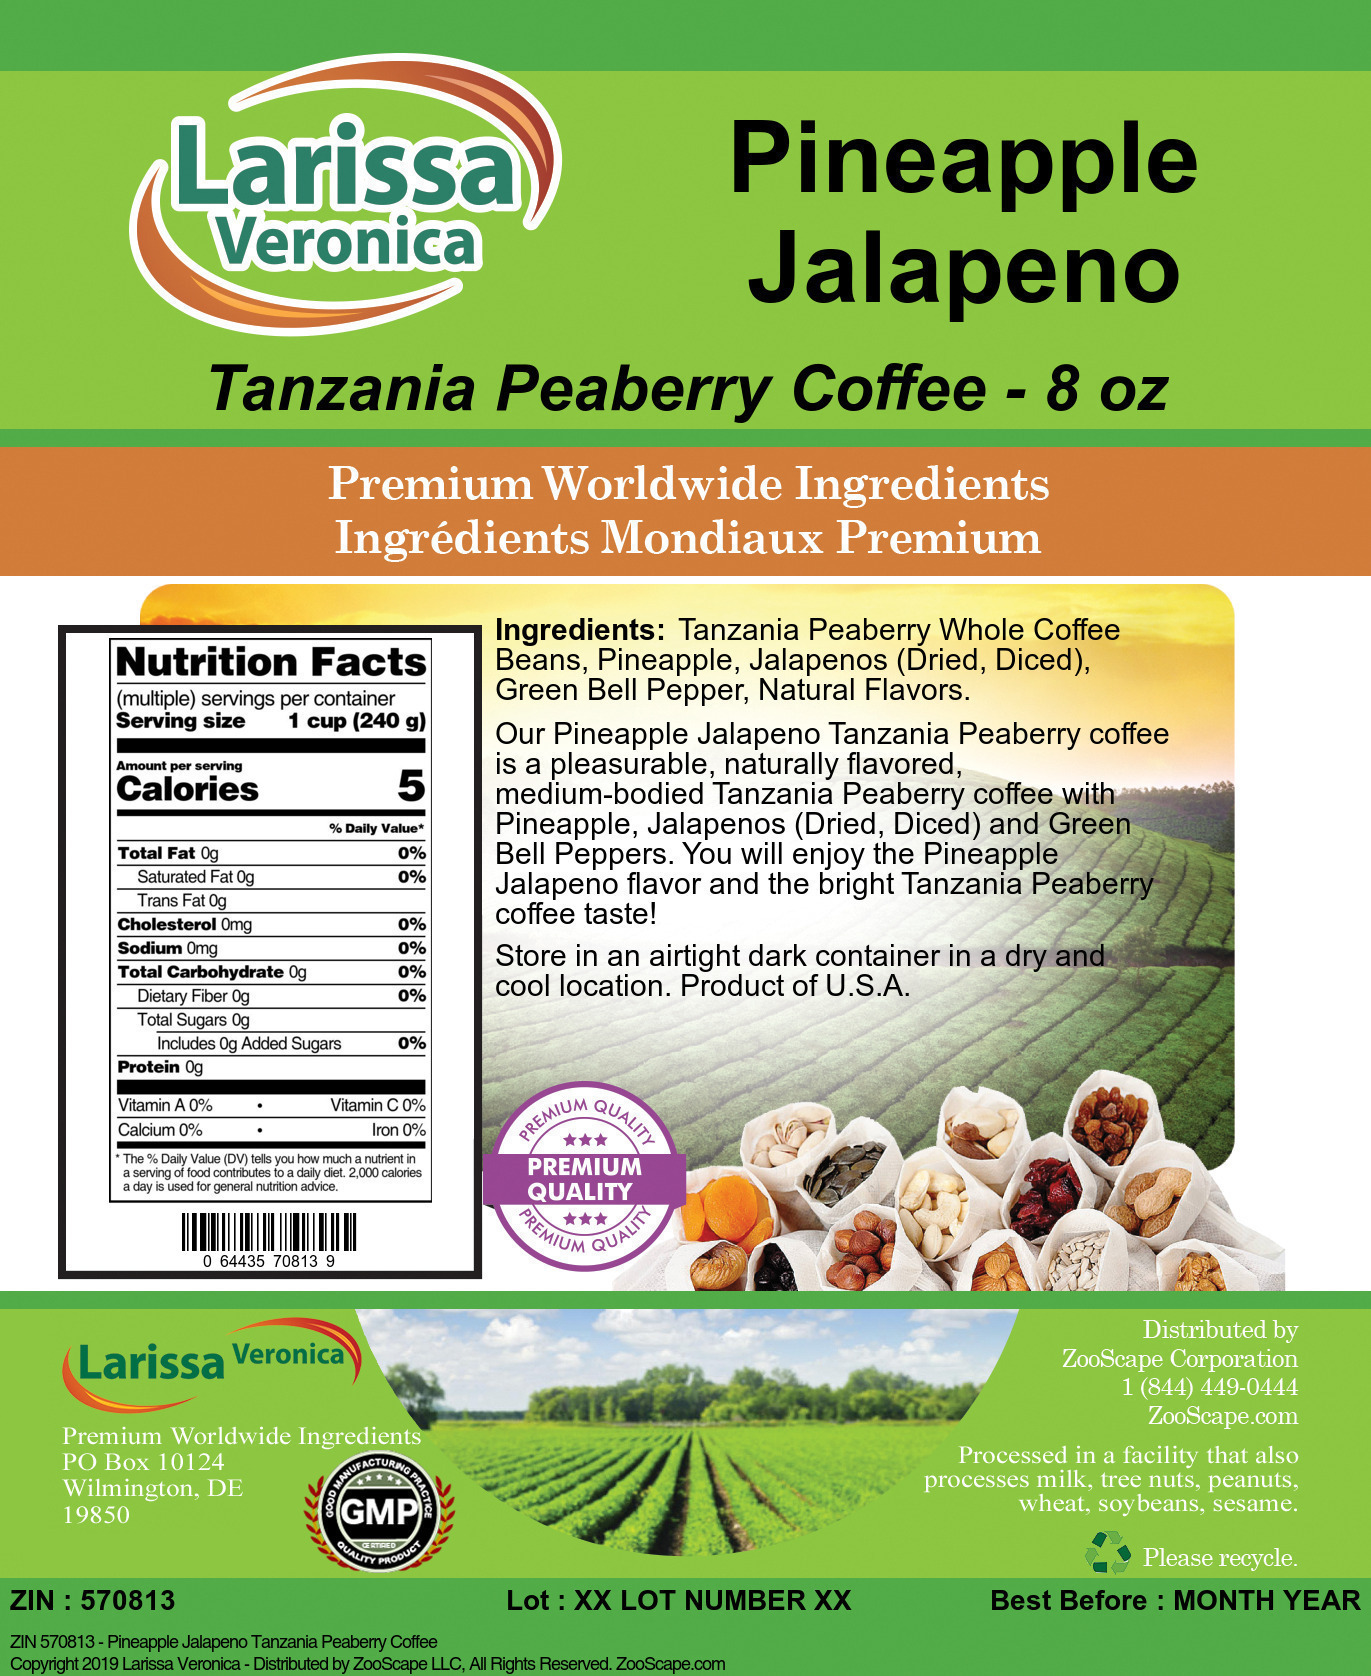 Pineapple Jalapeno Tanzania Peaberry Coffee - Label